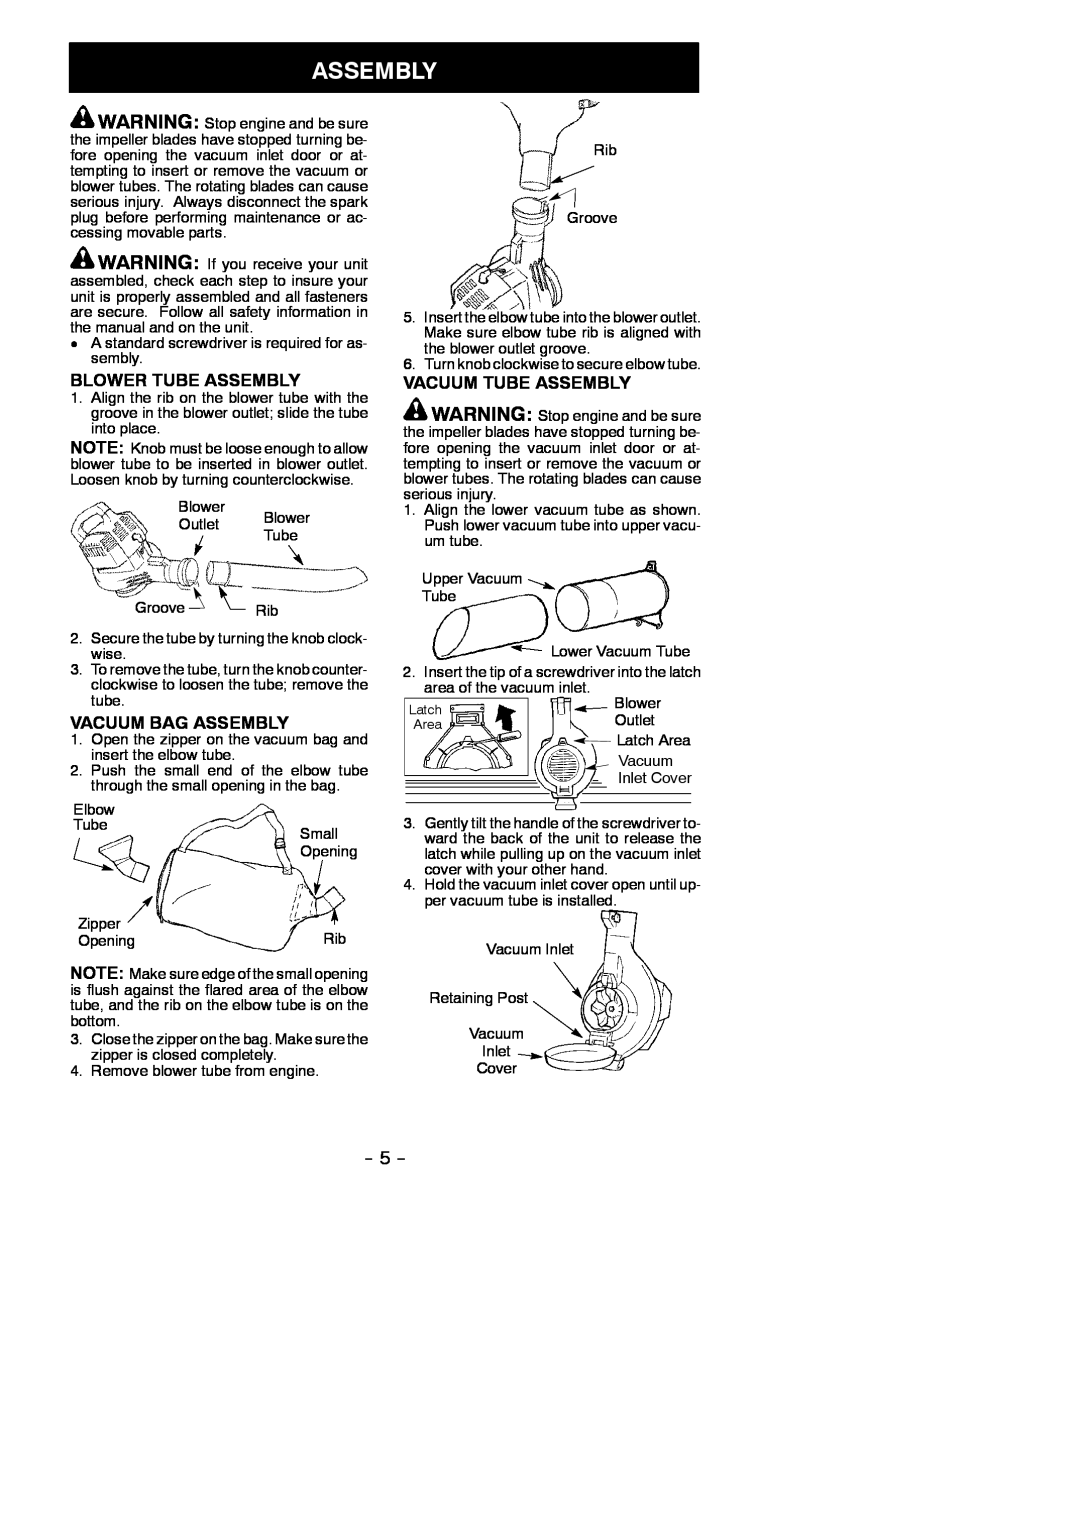 Poulan 545117517 instruction manual Blower Tube Assembly, Vacuum Bag Assembly, Vacuum Tube Assembly 